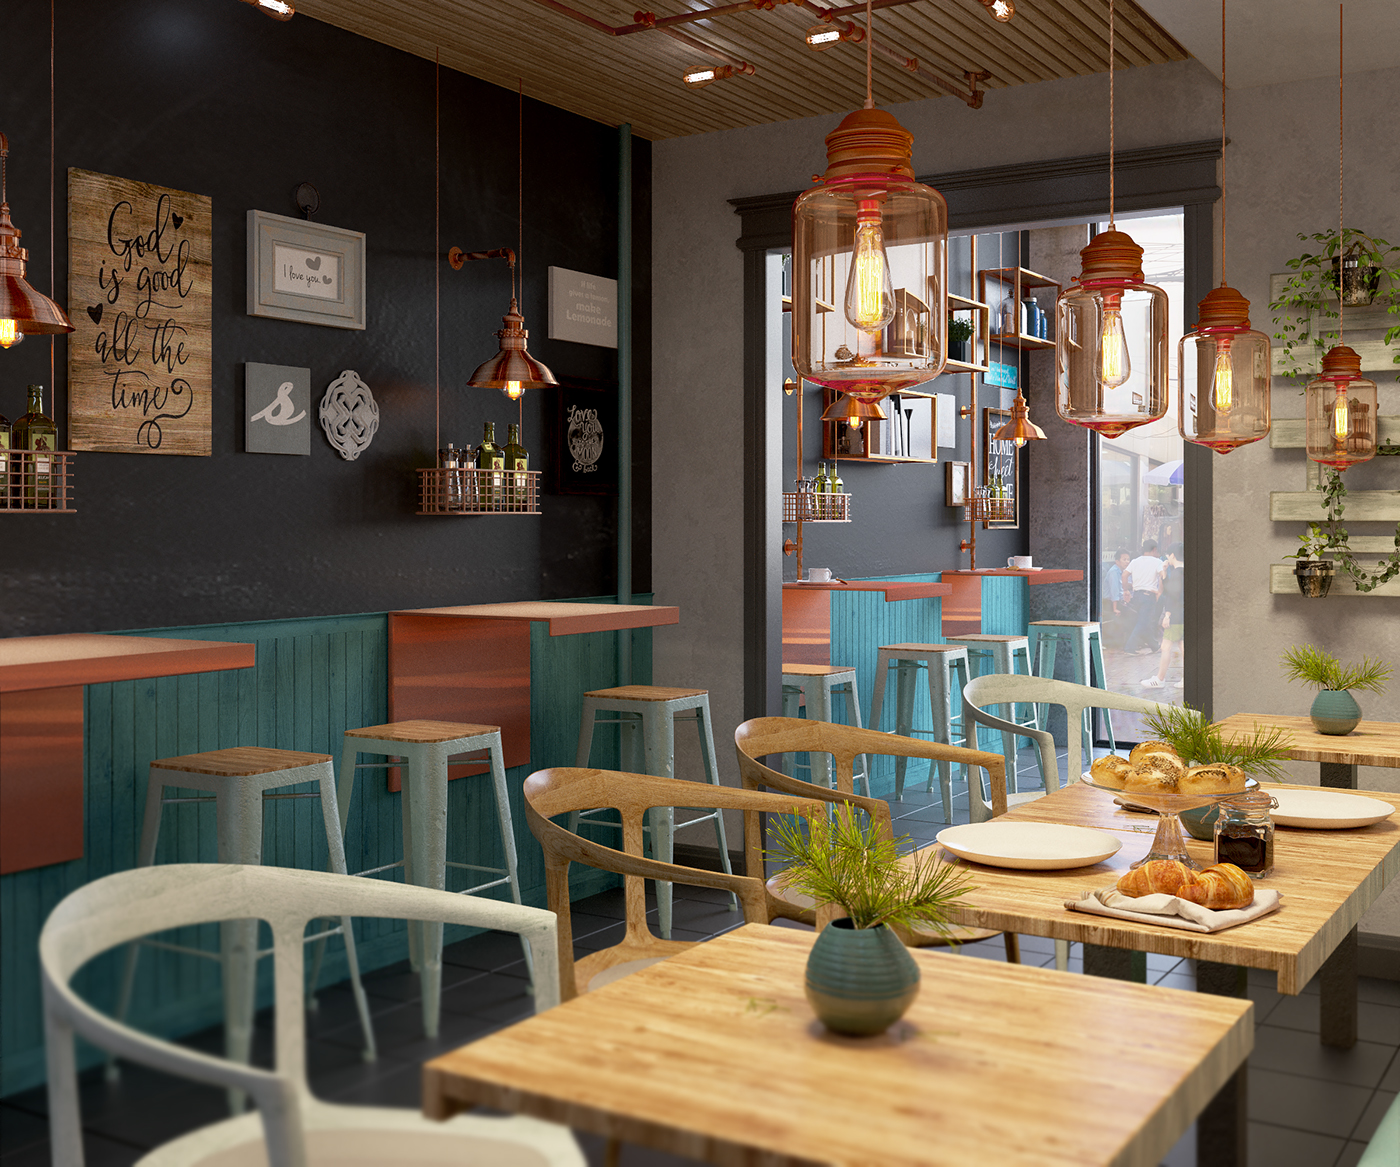 дизайн дизайн интерьера интерьер кафе cafe interior cafe design interior design HORECA restaurant Coffee House